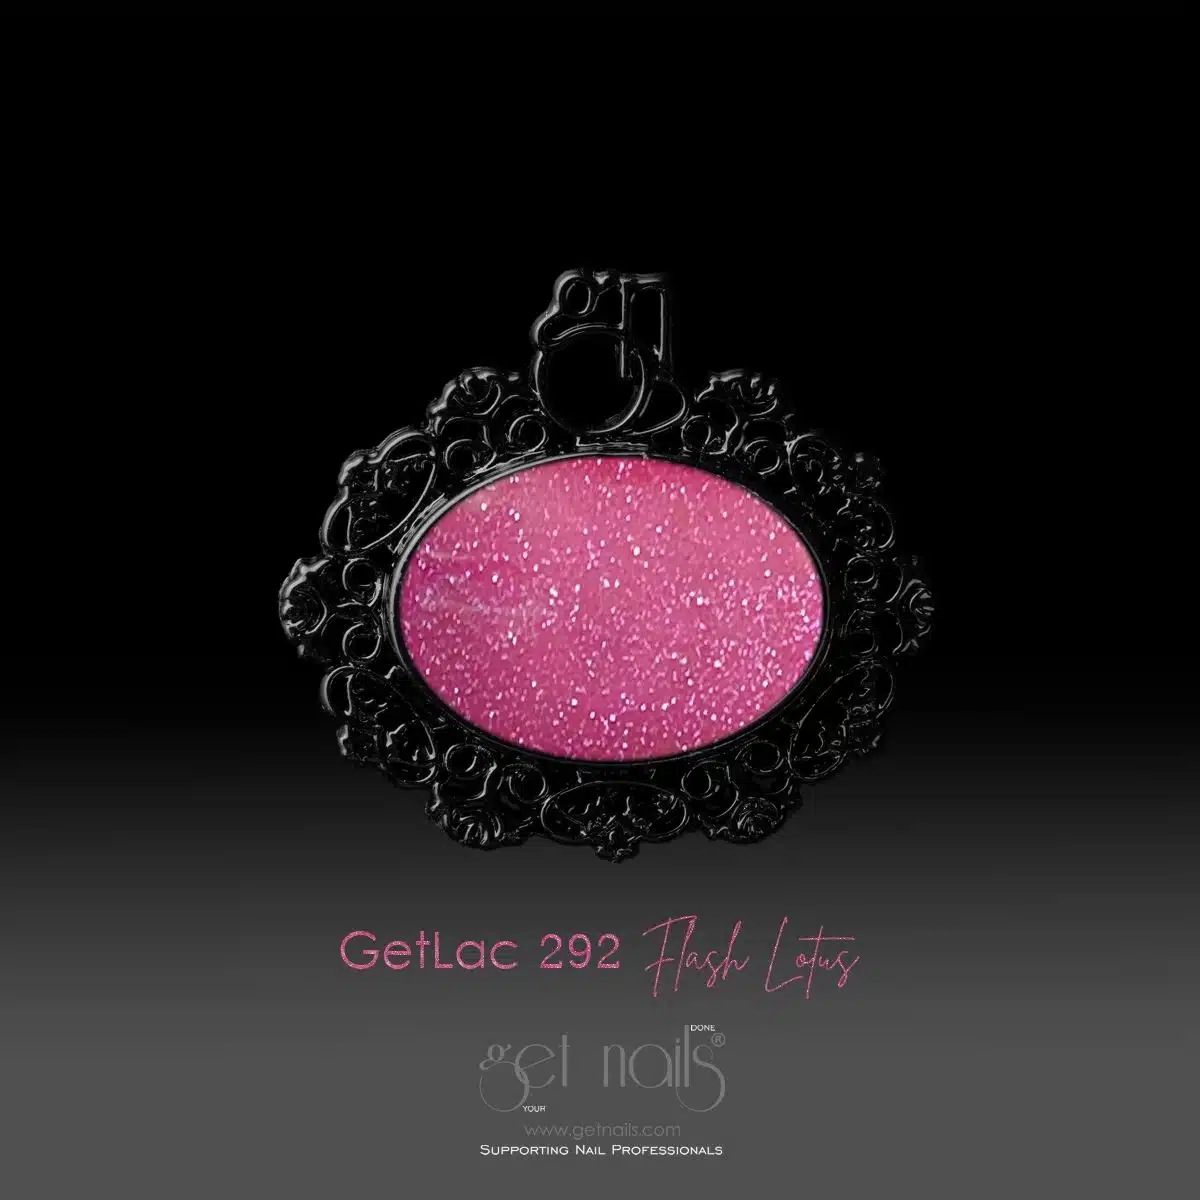 Get Nails Austria - GetLac 292 Flash Lotus 15g